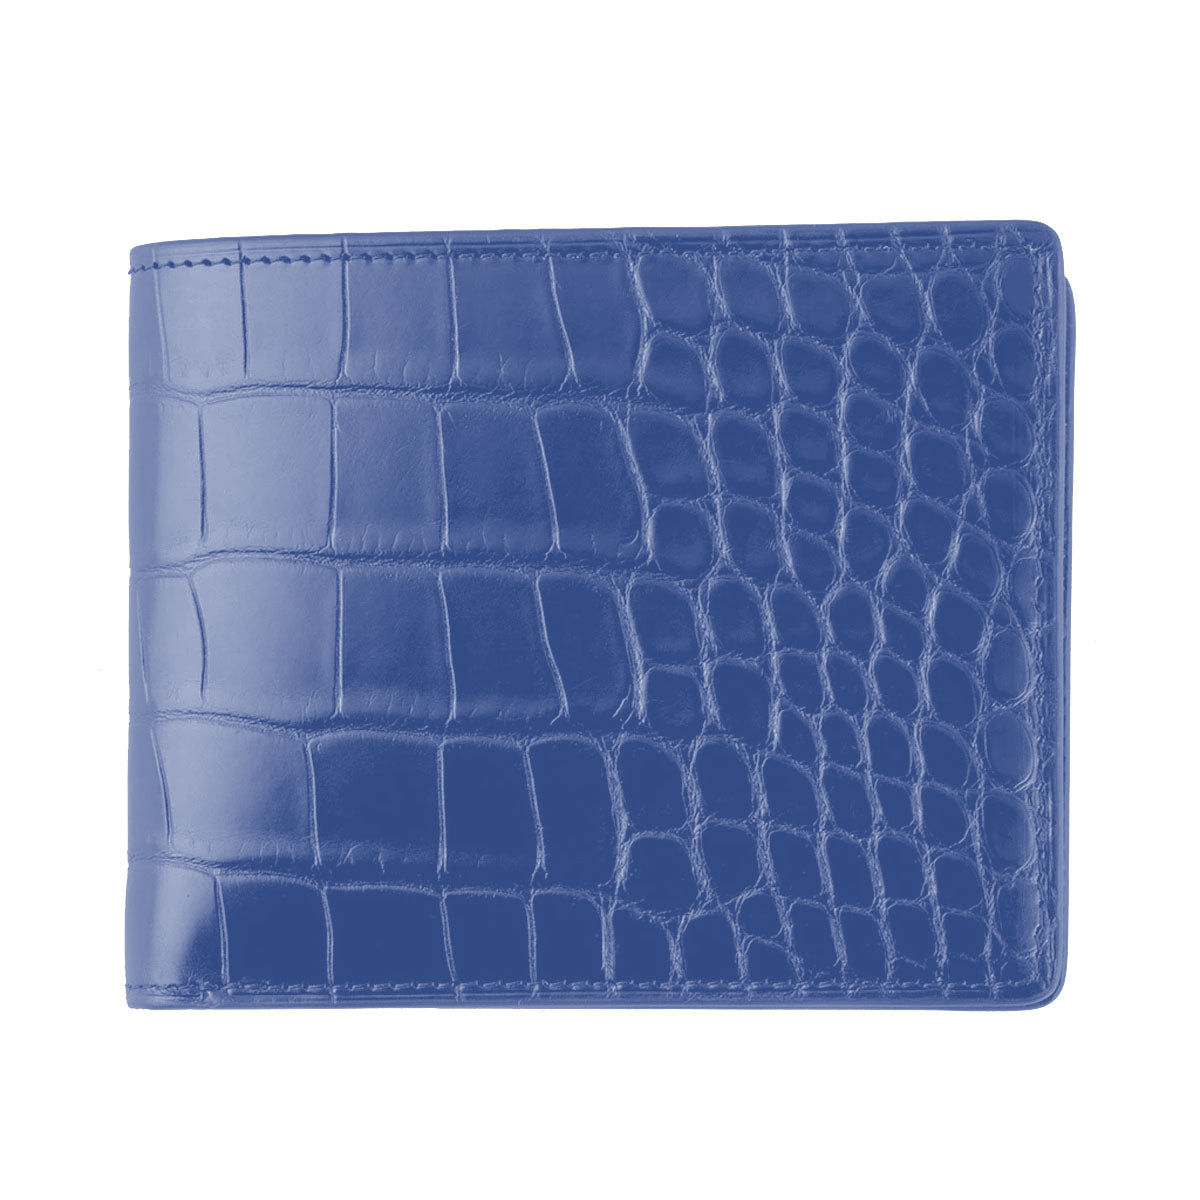 Royal blue ostrich wallet - Luxury leathergoods